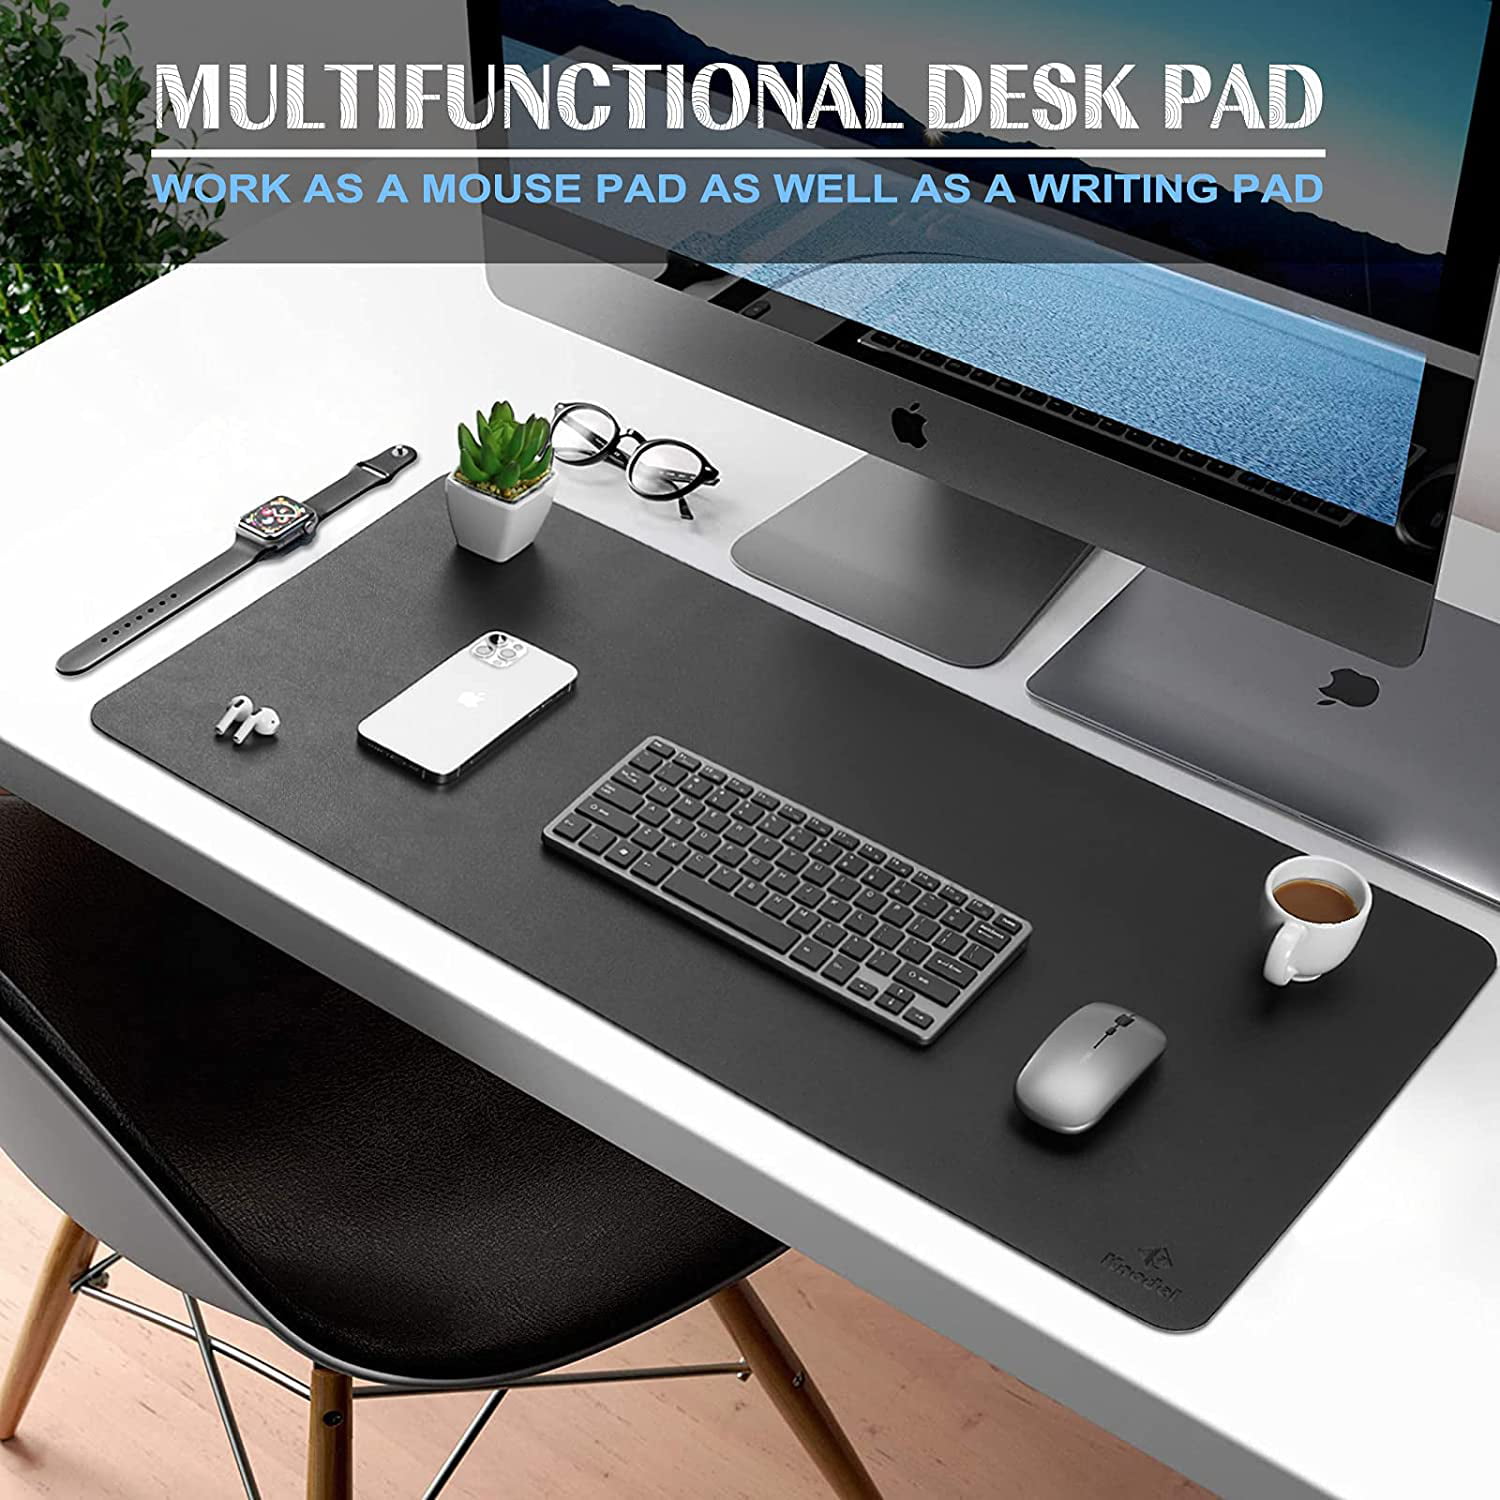 Official Mapa Do Mundo in Portugal Desk Mat - Desk Decor - 13.5 x 19.5  inches | 34.5 x 49.5 cm - Desk Pad - Desk Protector Mat - Cute Stationery 